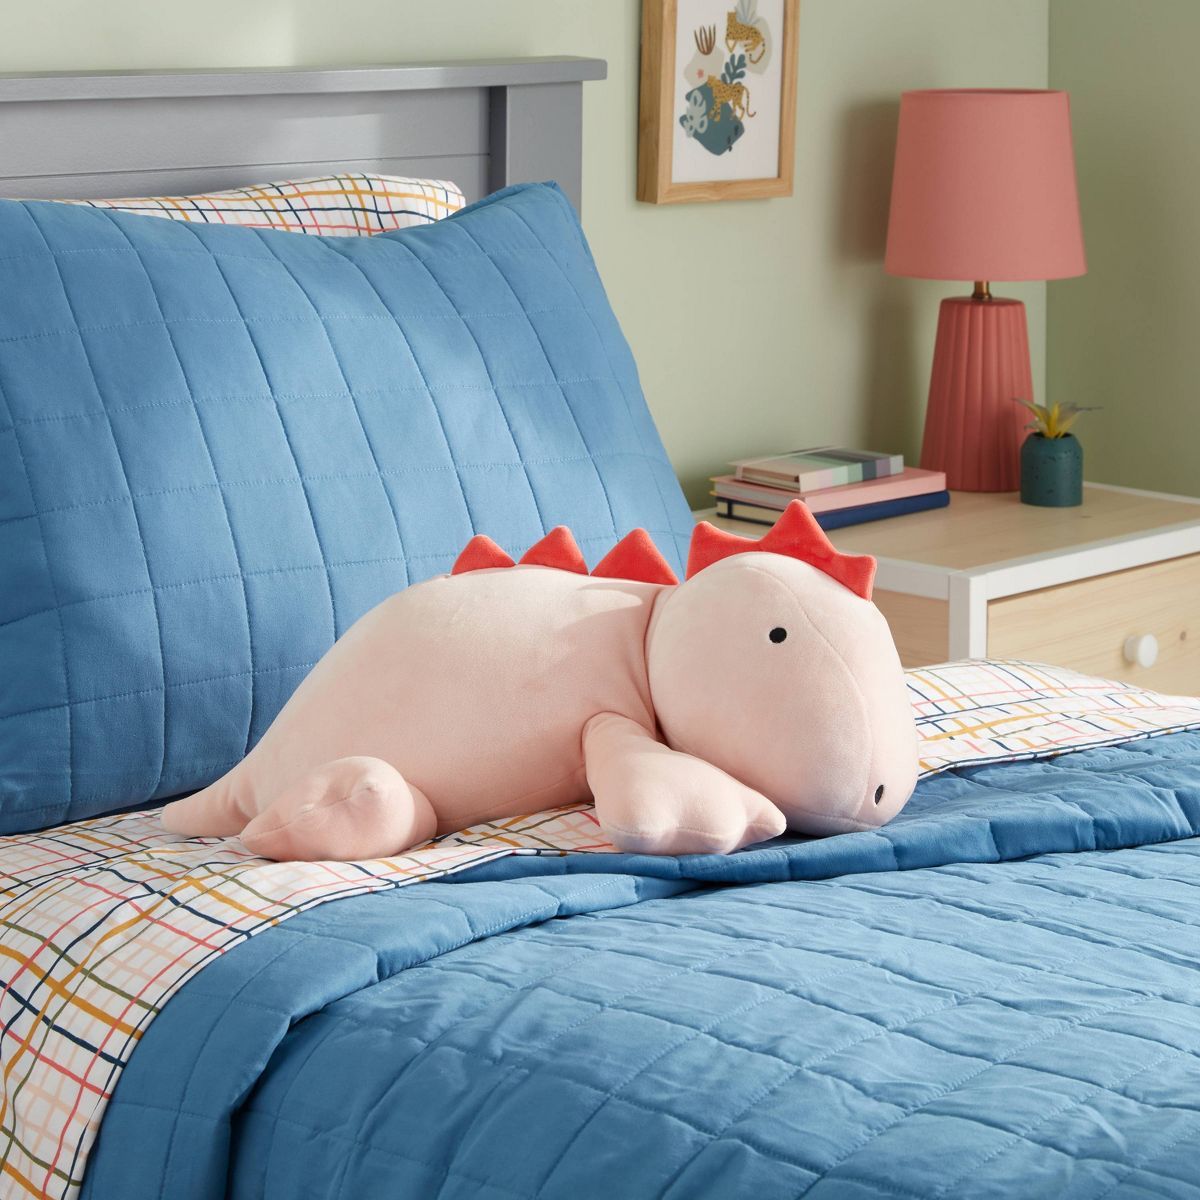 Dinosaur Weighted Plush Kids' Throw Pillow Pink - Pillowfort™ | Target